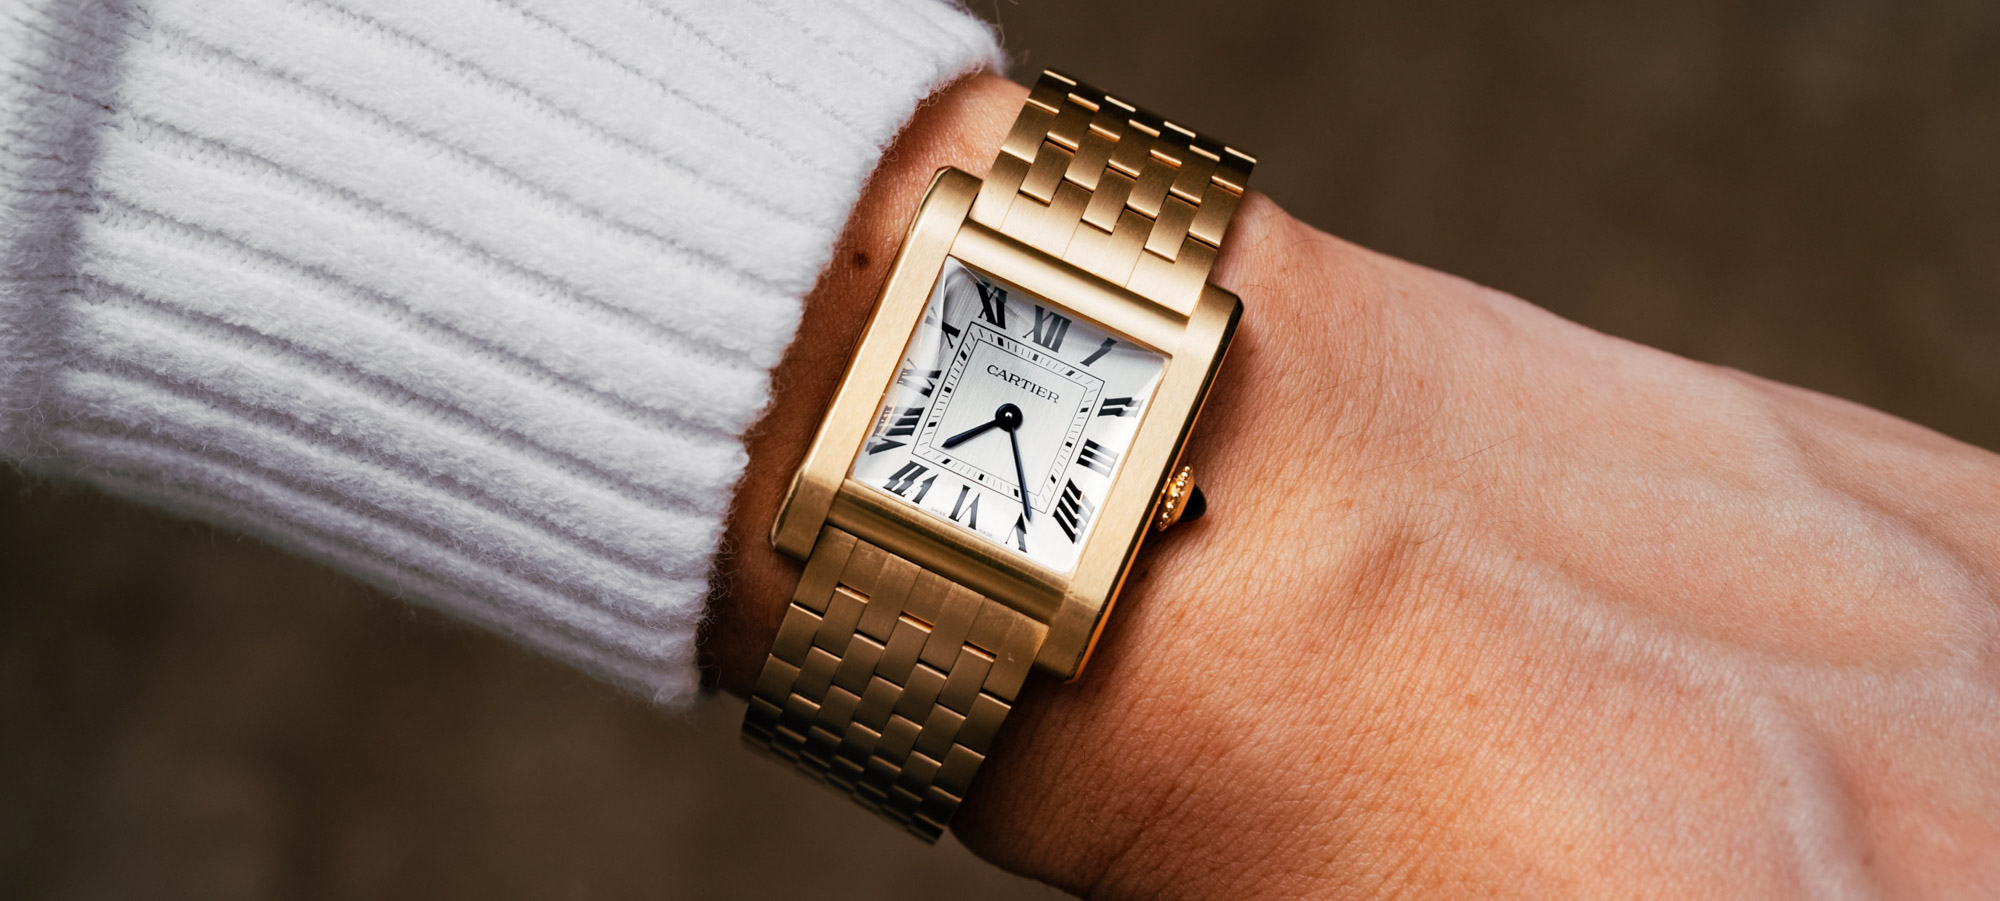 Help me choose - Cartier on 8 inch wrist?